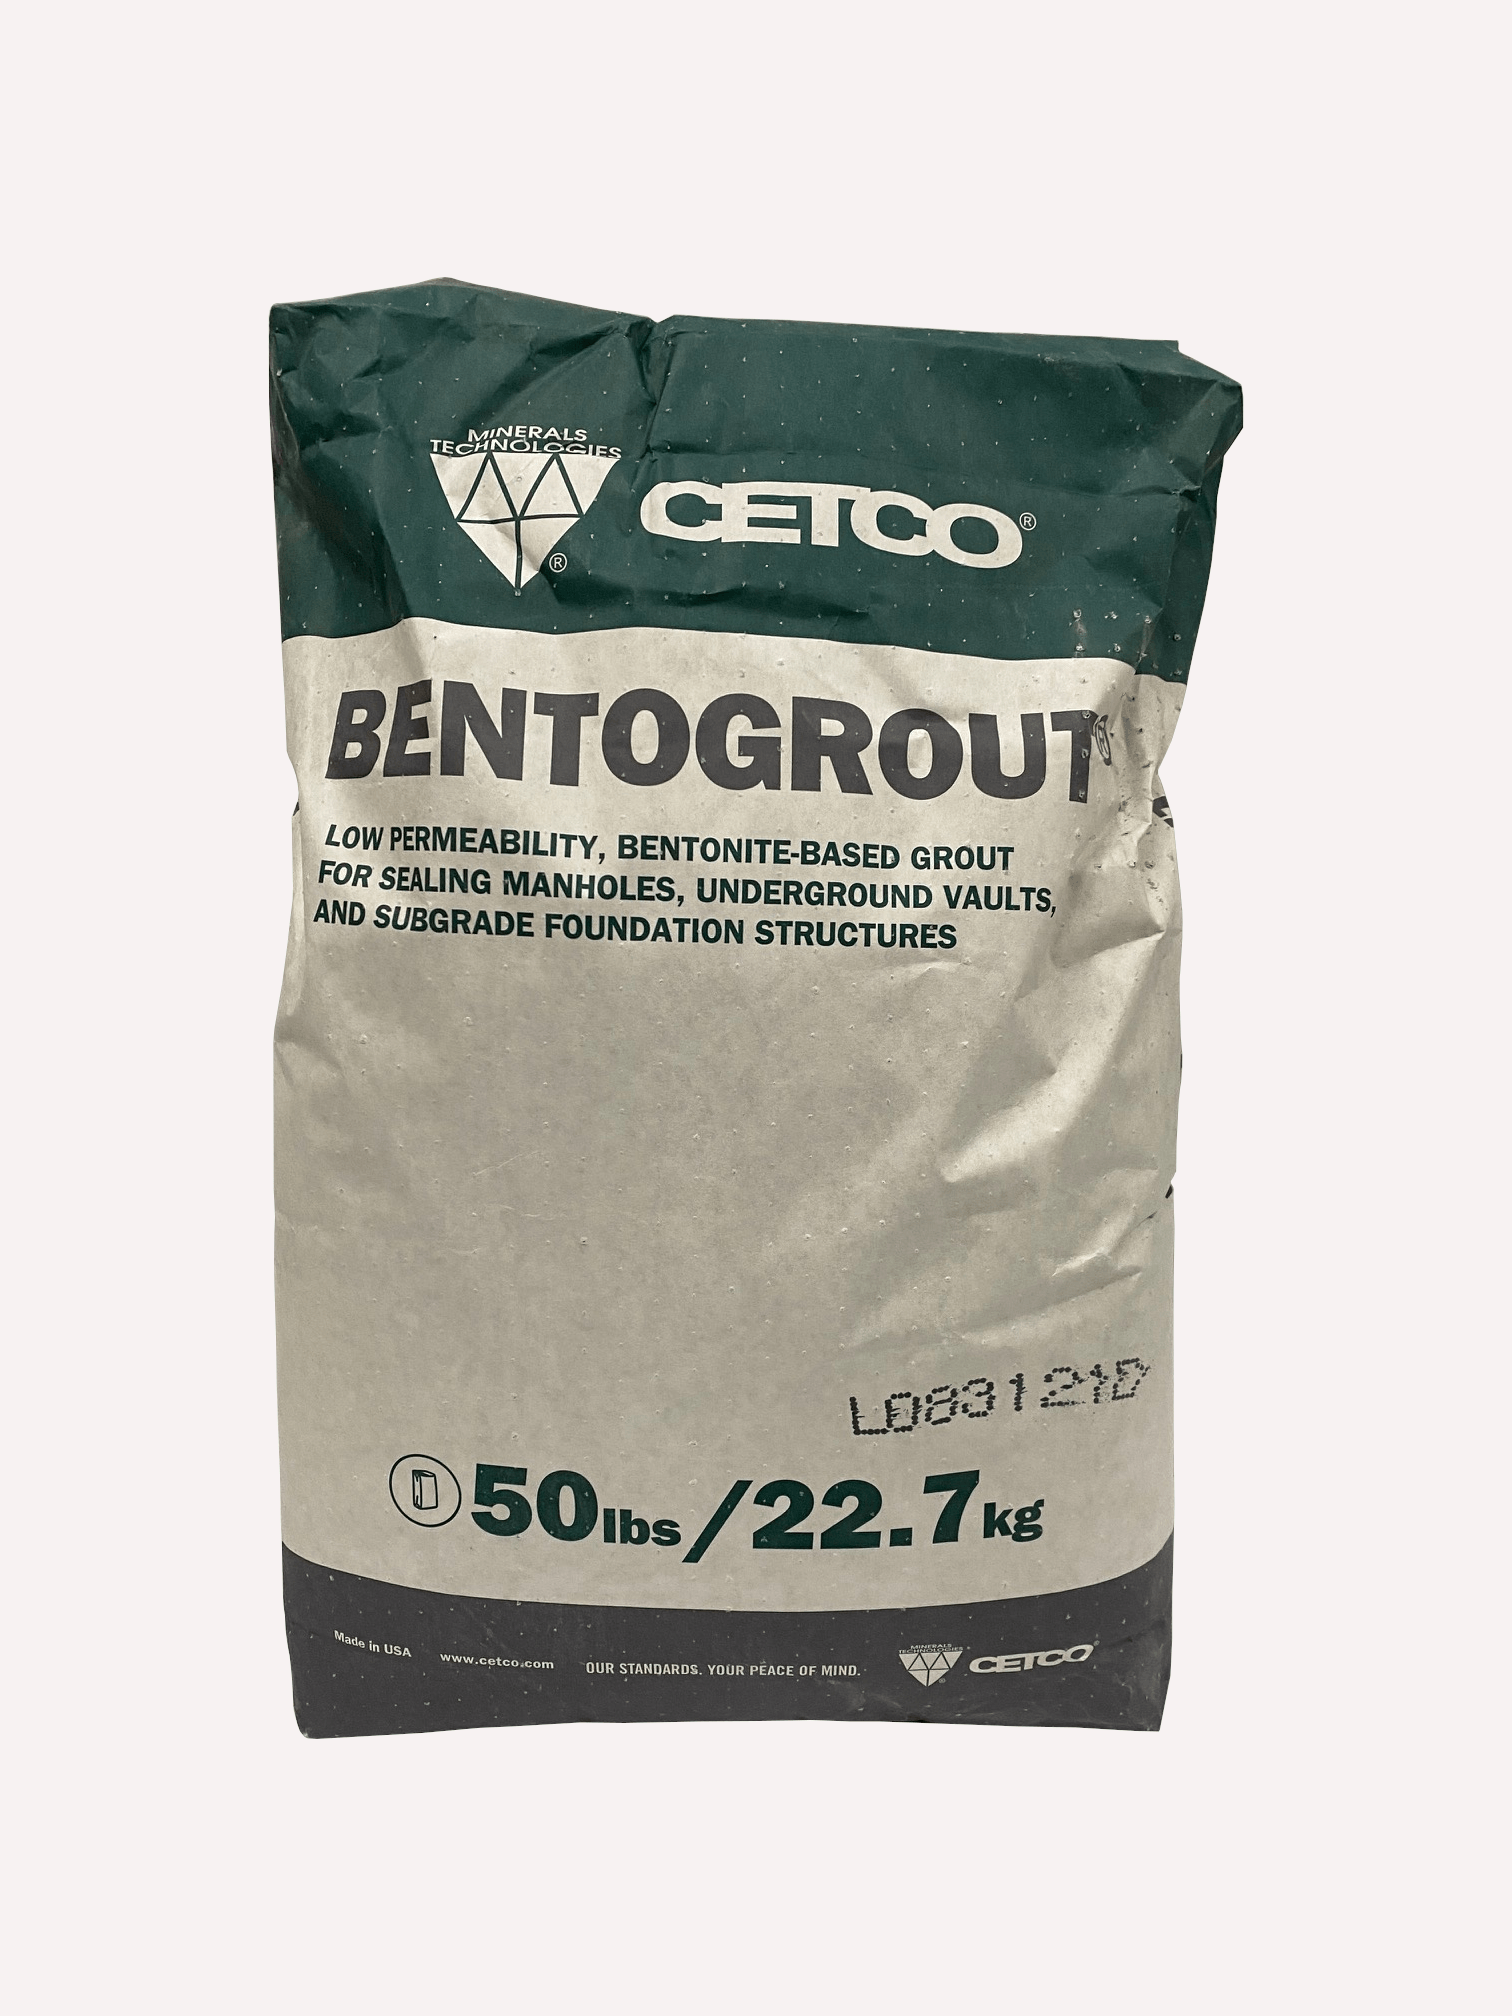 Bentonite Bentogrout from CETCO for waterproofing